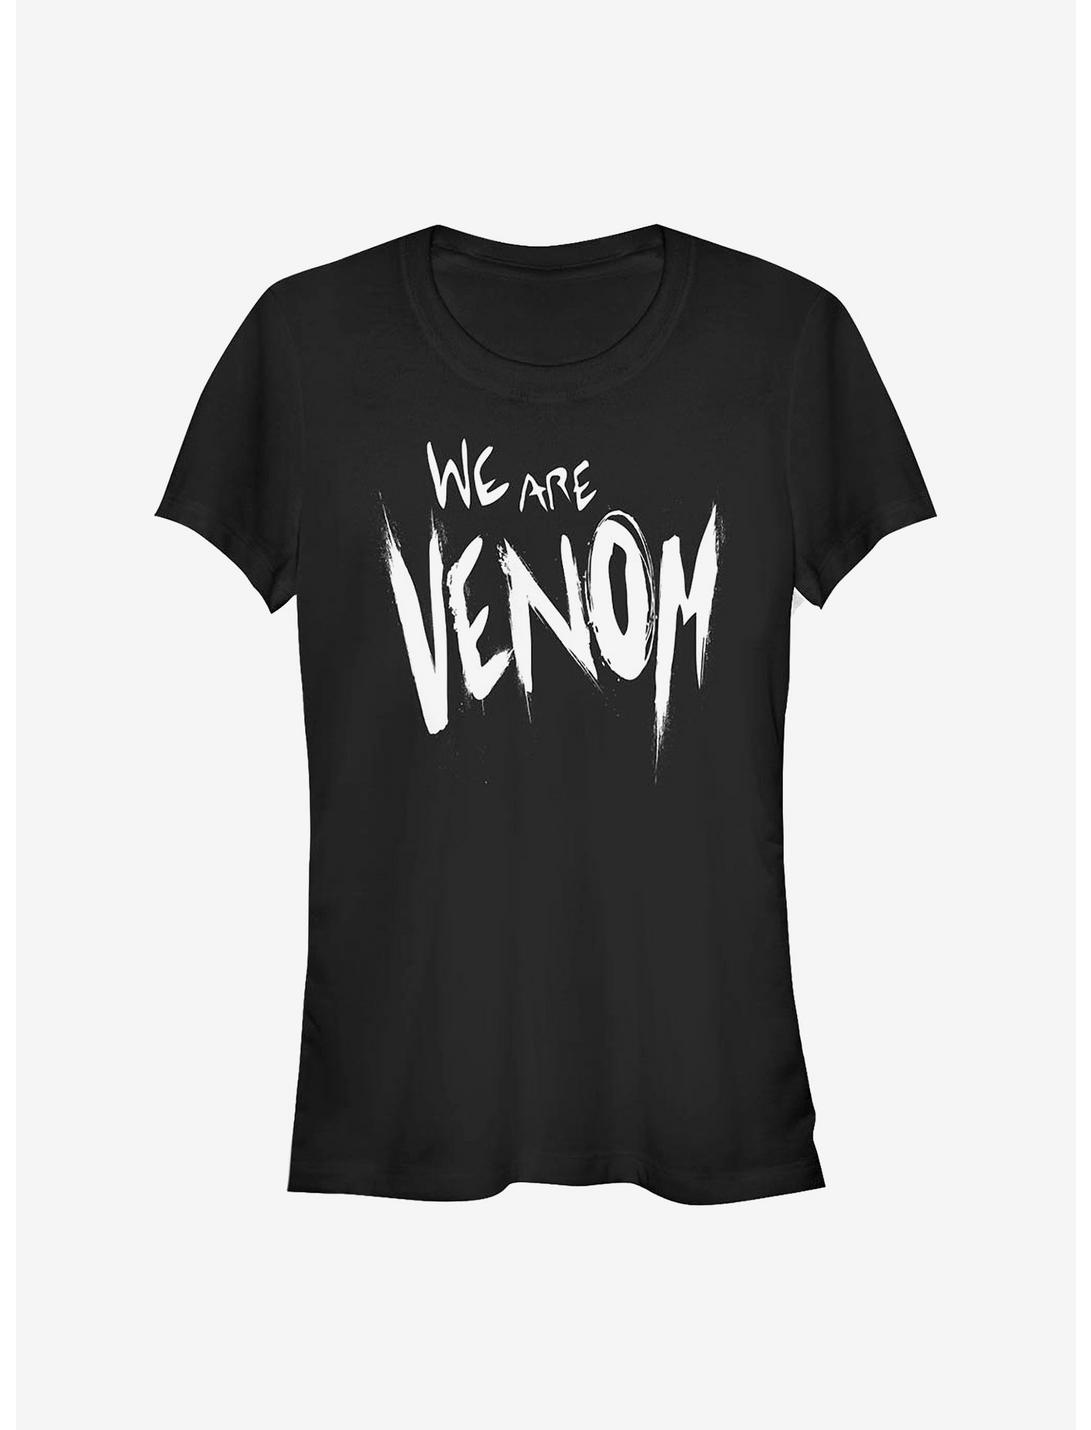 Marvel Venom We Are Venom Slime Girls T-Shirt, , hi-res